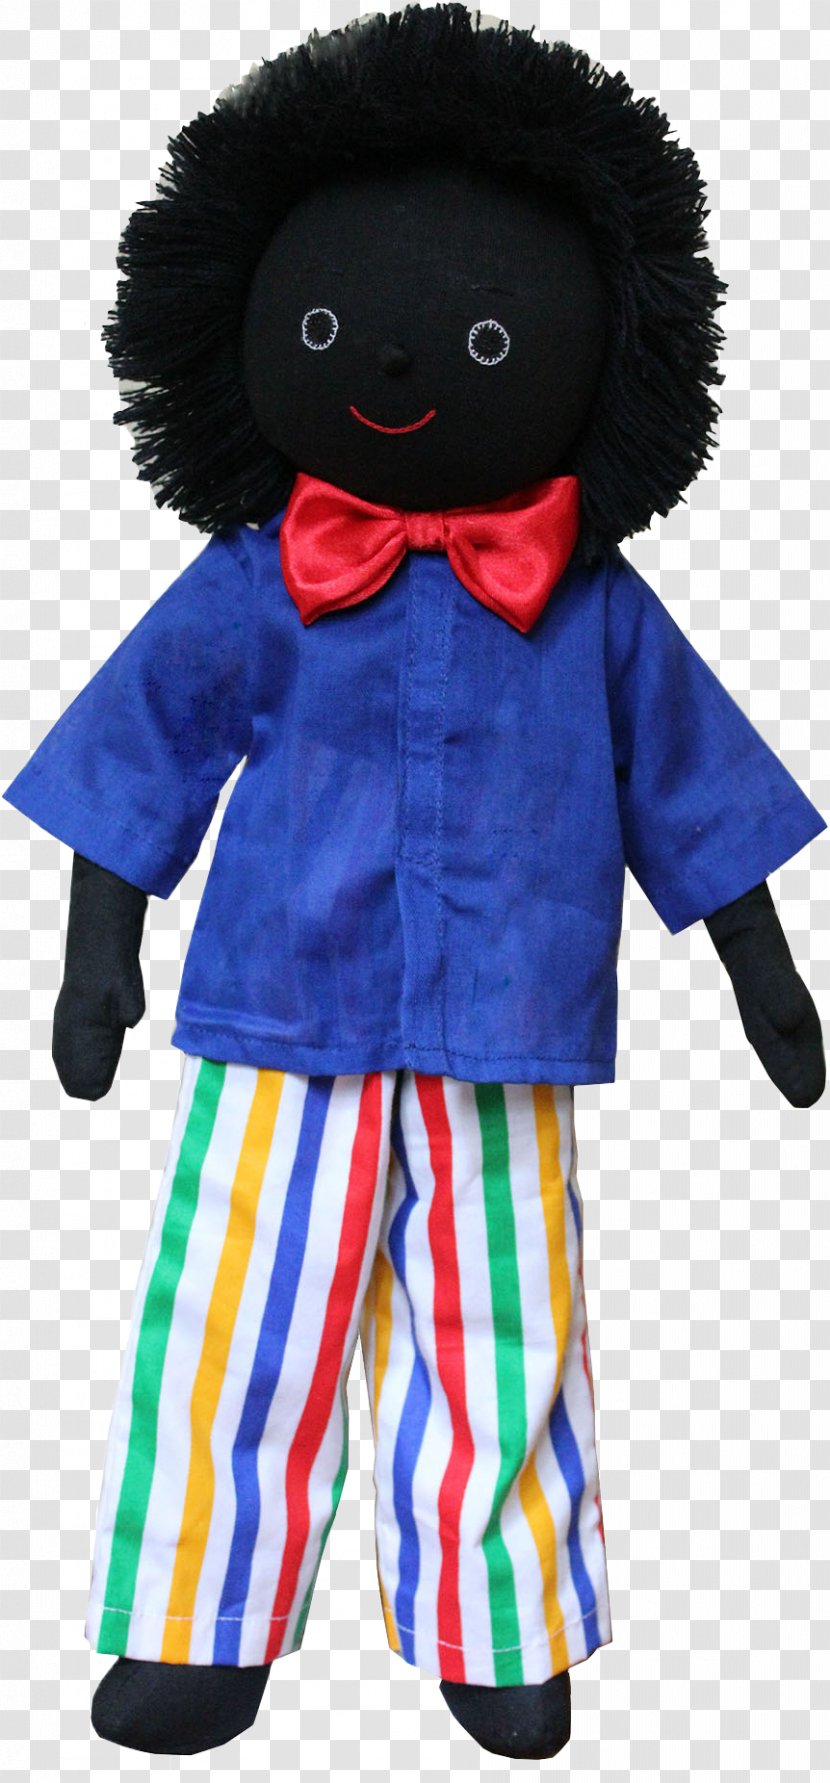 Golliwog Stuffed Animals & Cuddly Toys Doll Merrythought - Mascot Transparent PNG